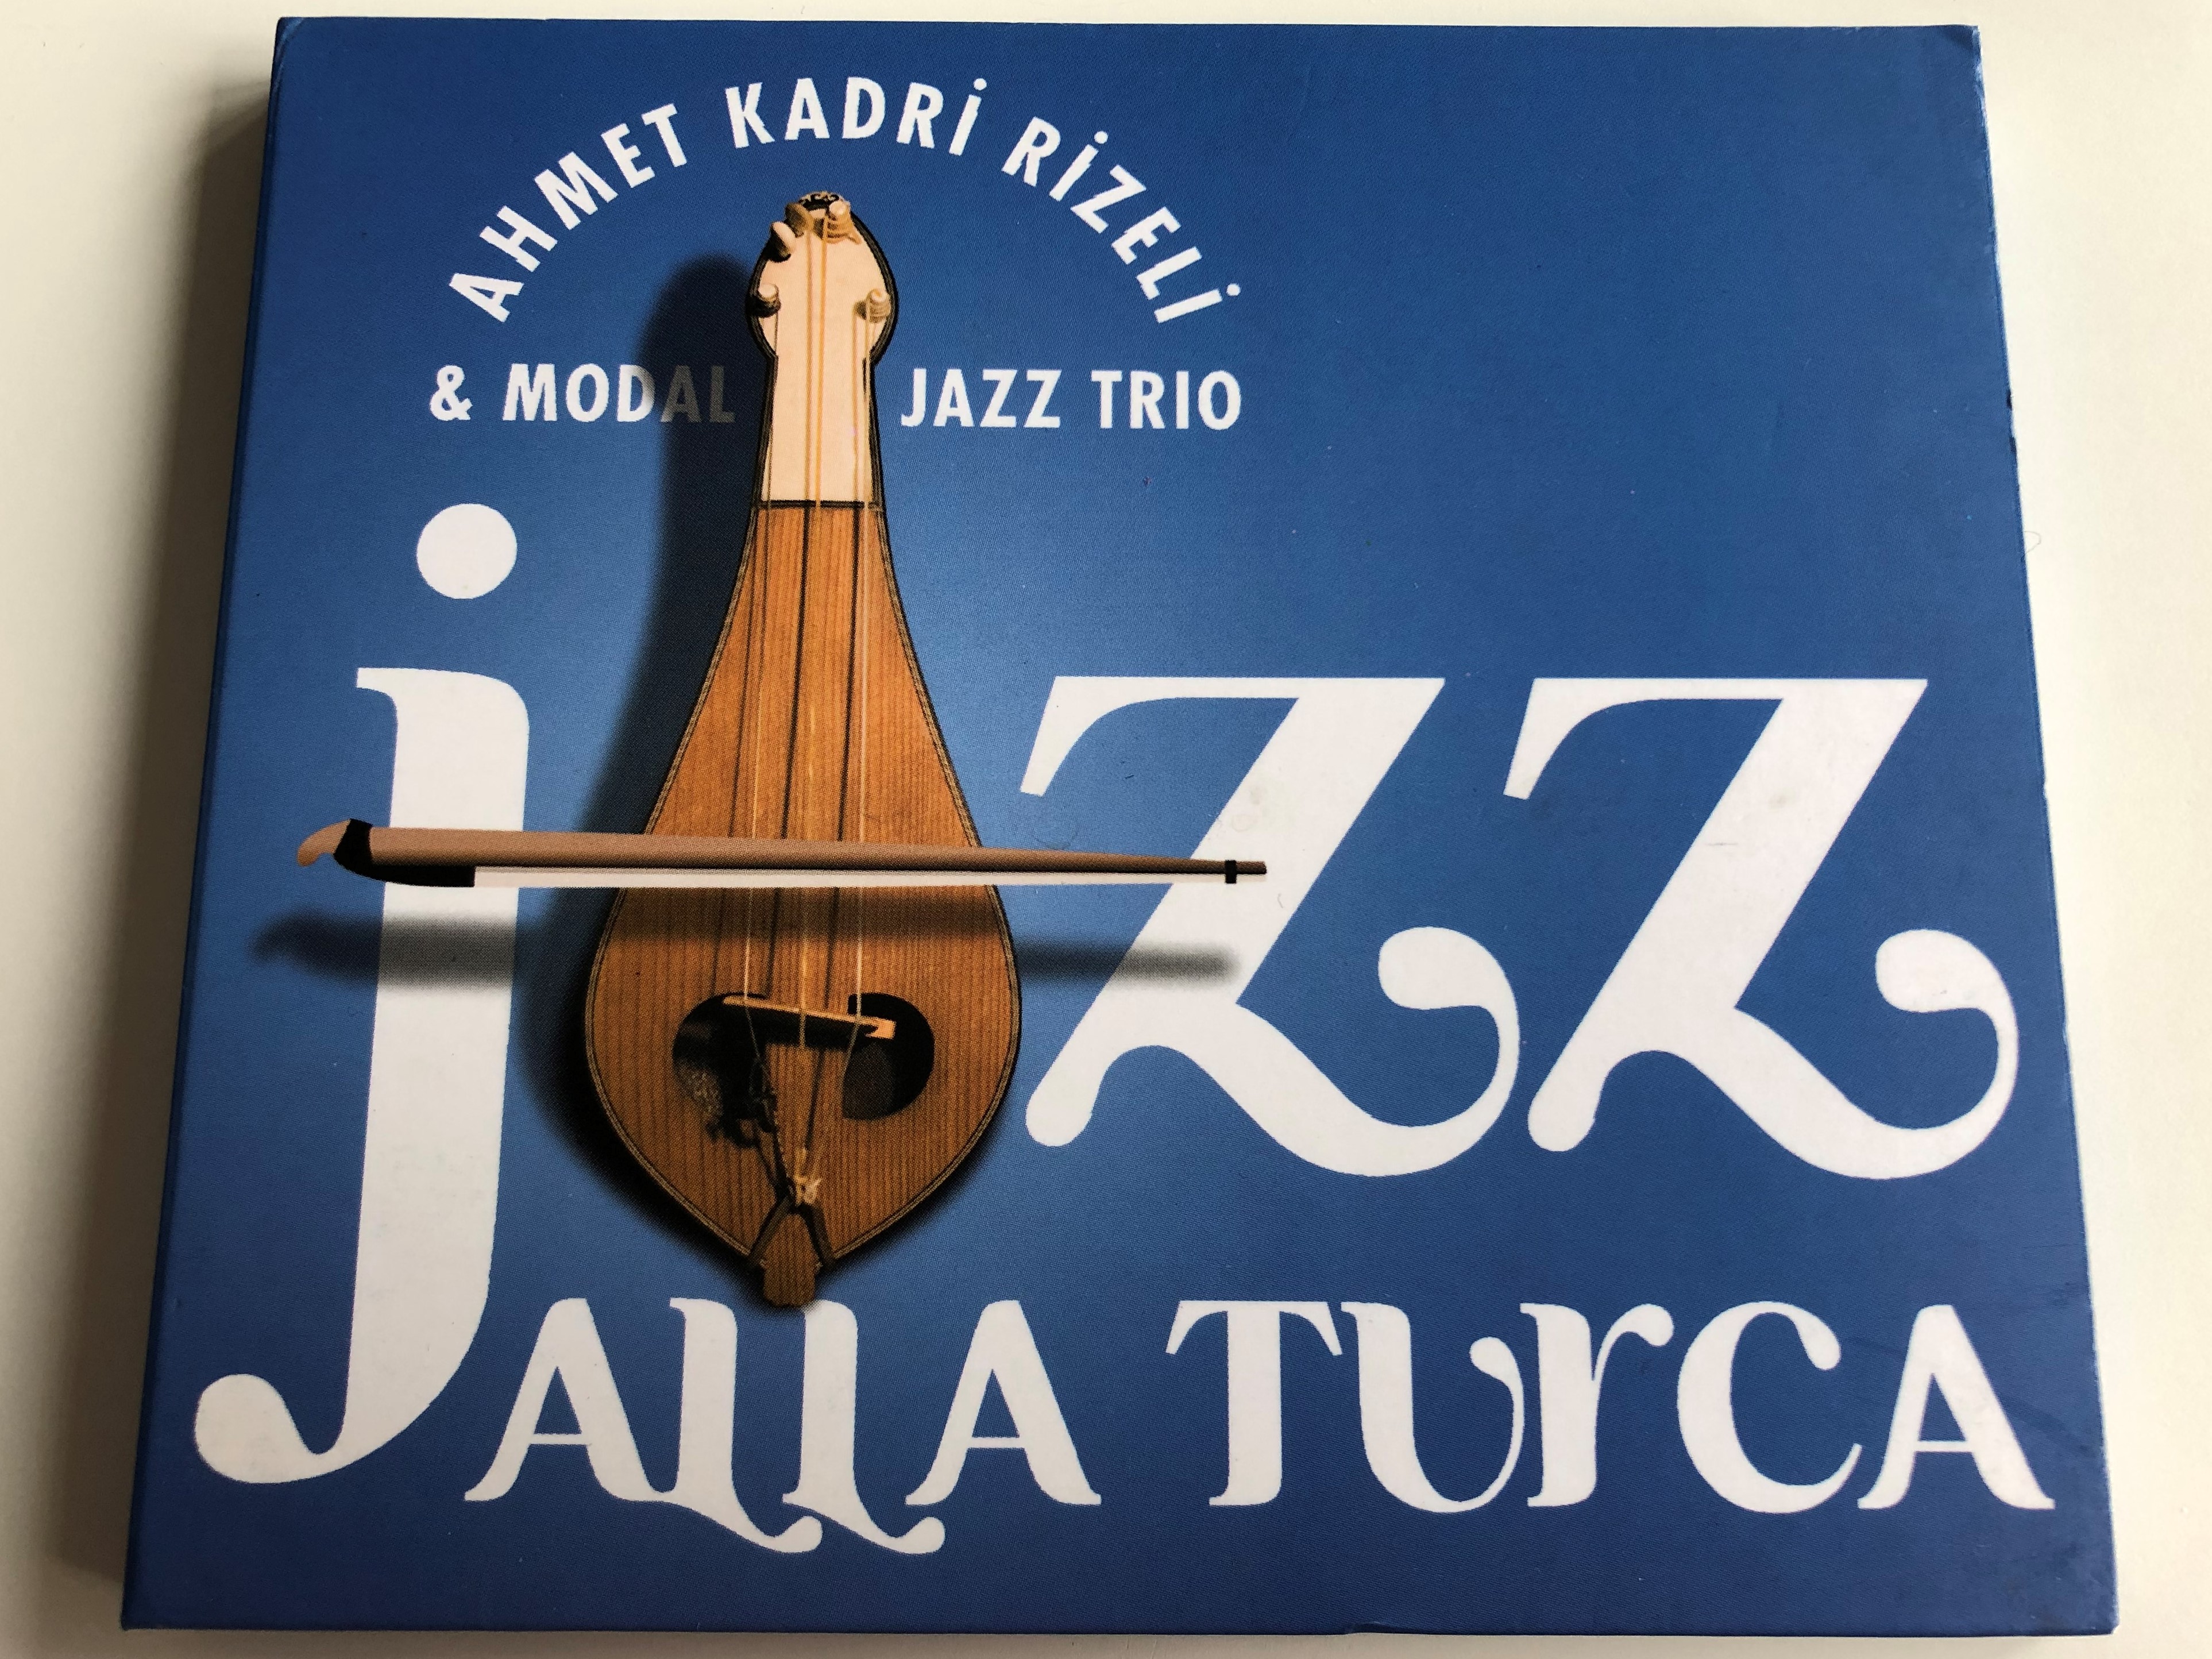 jazz-alla-turca-ahmet-kadri-rizeli-modal-jazz-trio-turkish-cd-2008-1-.jpg